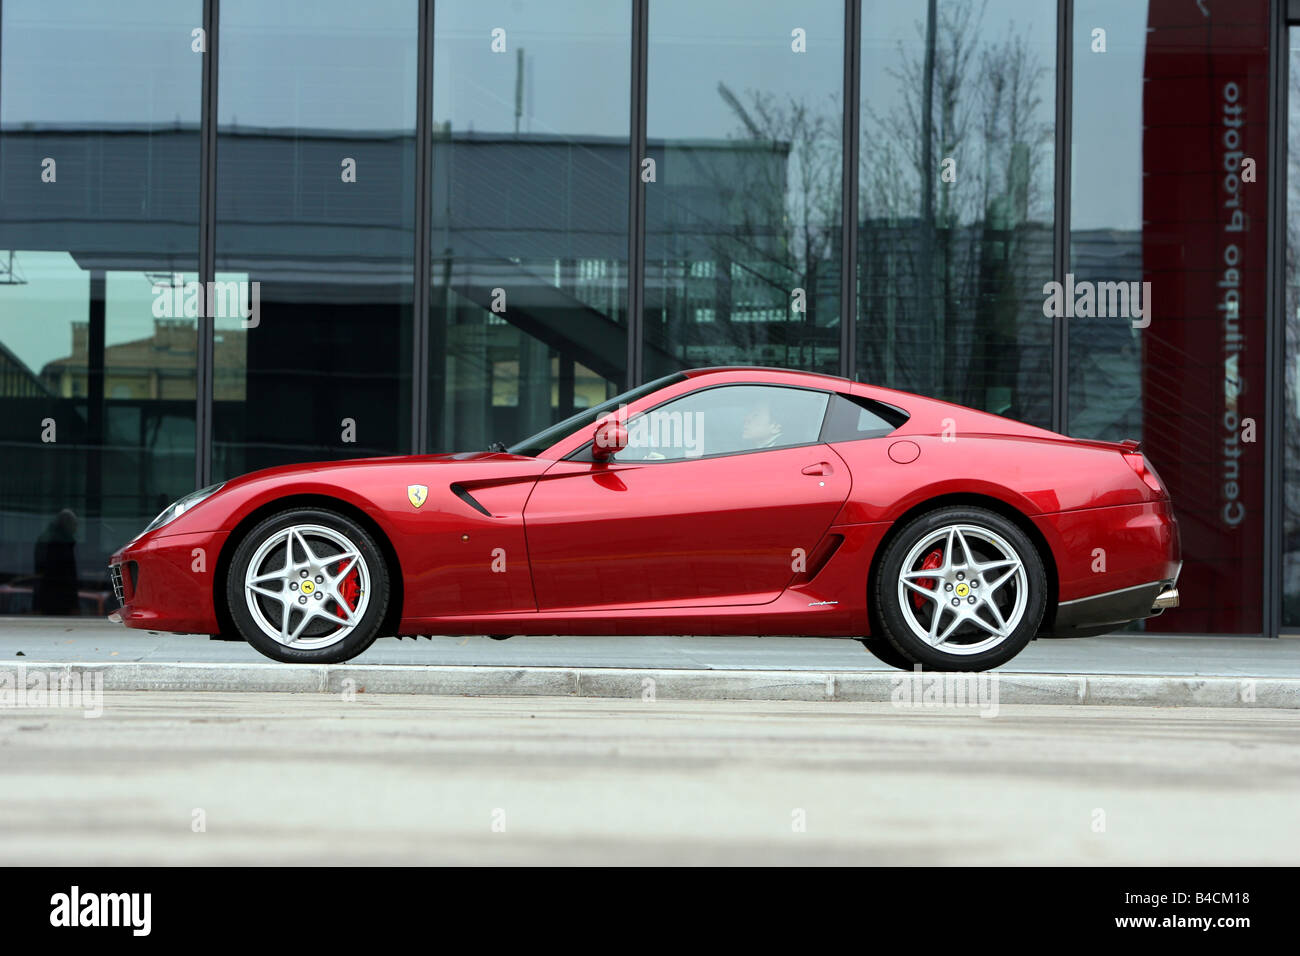 Ferrari 599 GTB Fiorano, red, model year 2006-, standing, upholding, side view, City Stock Photo